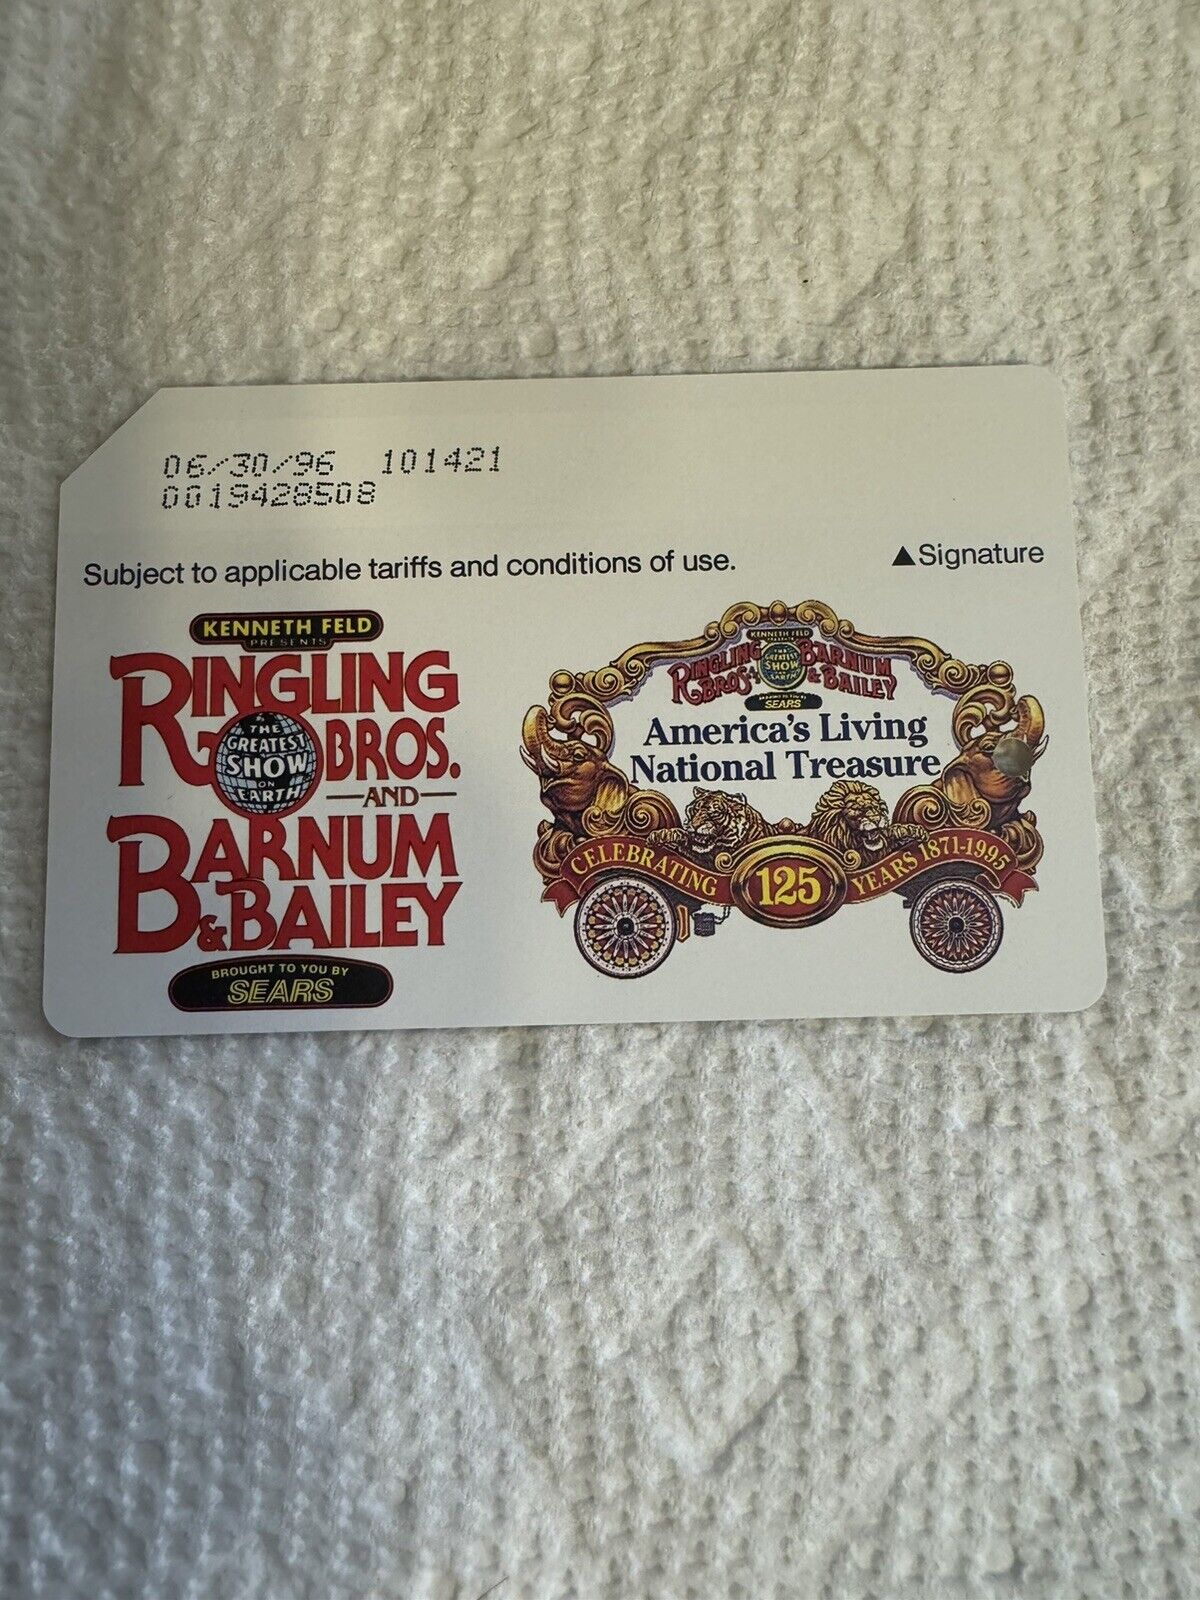 Expired NYC MTA Metrocard Ringling Bros. and Barnum & Bailey Circus - LOGO（A1）